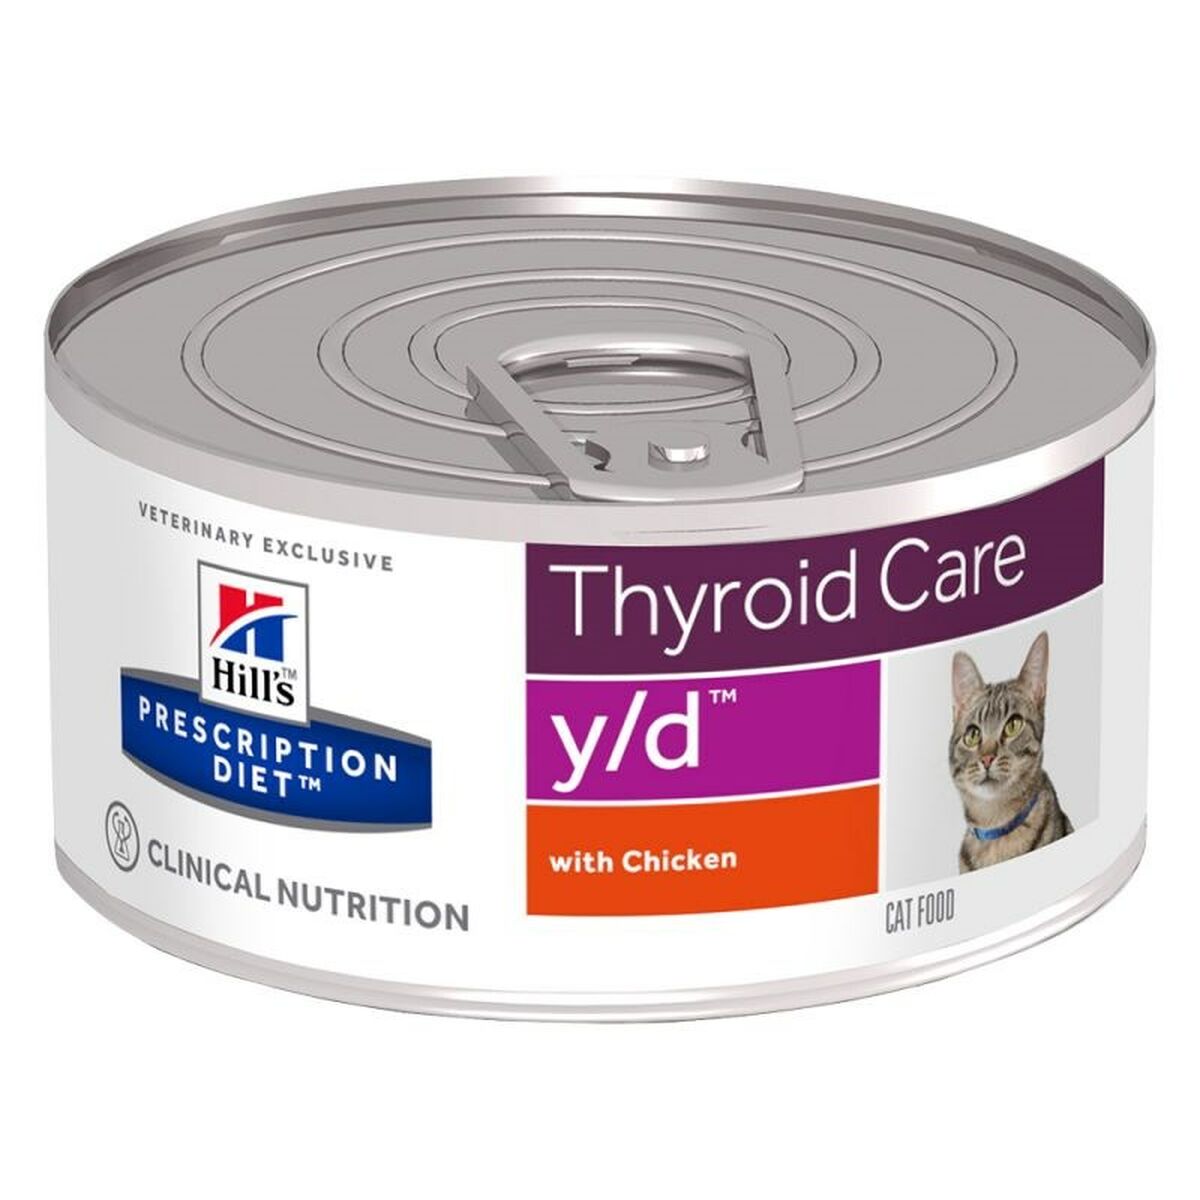 Aliments pour chat Hill's Thyroid Care Poulet